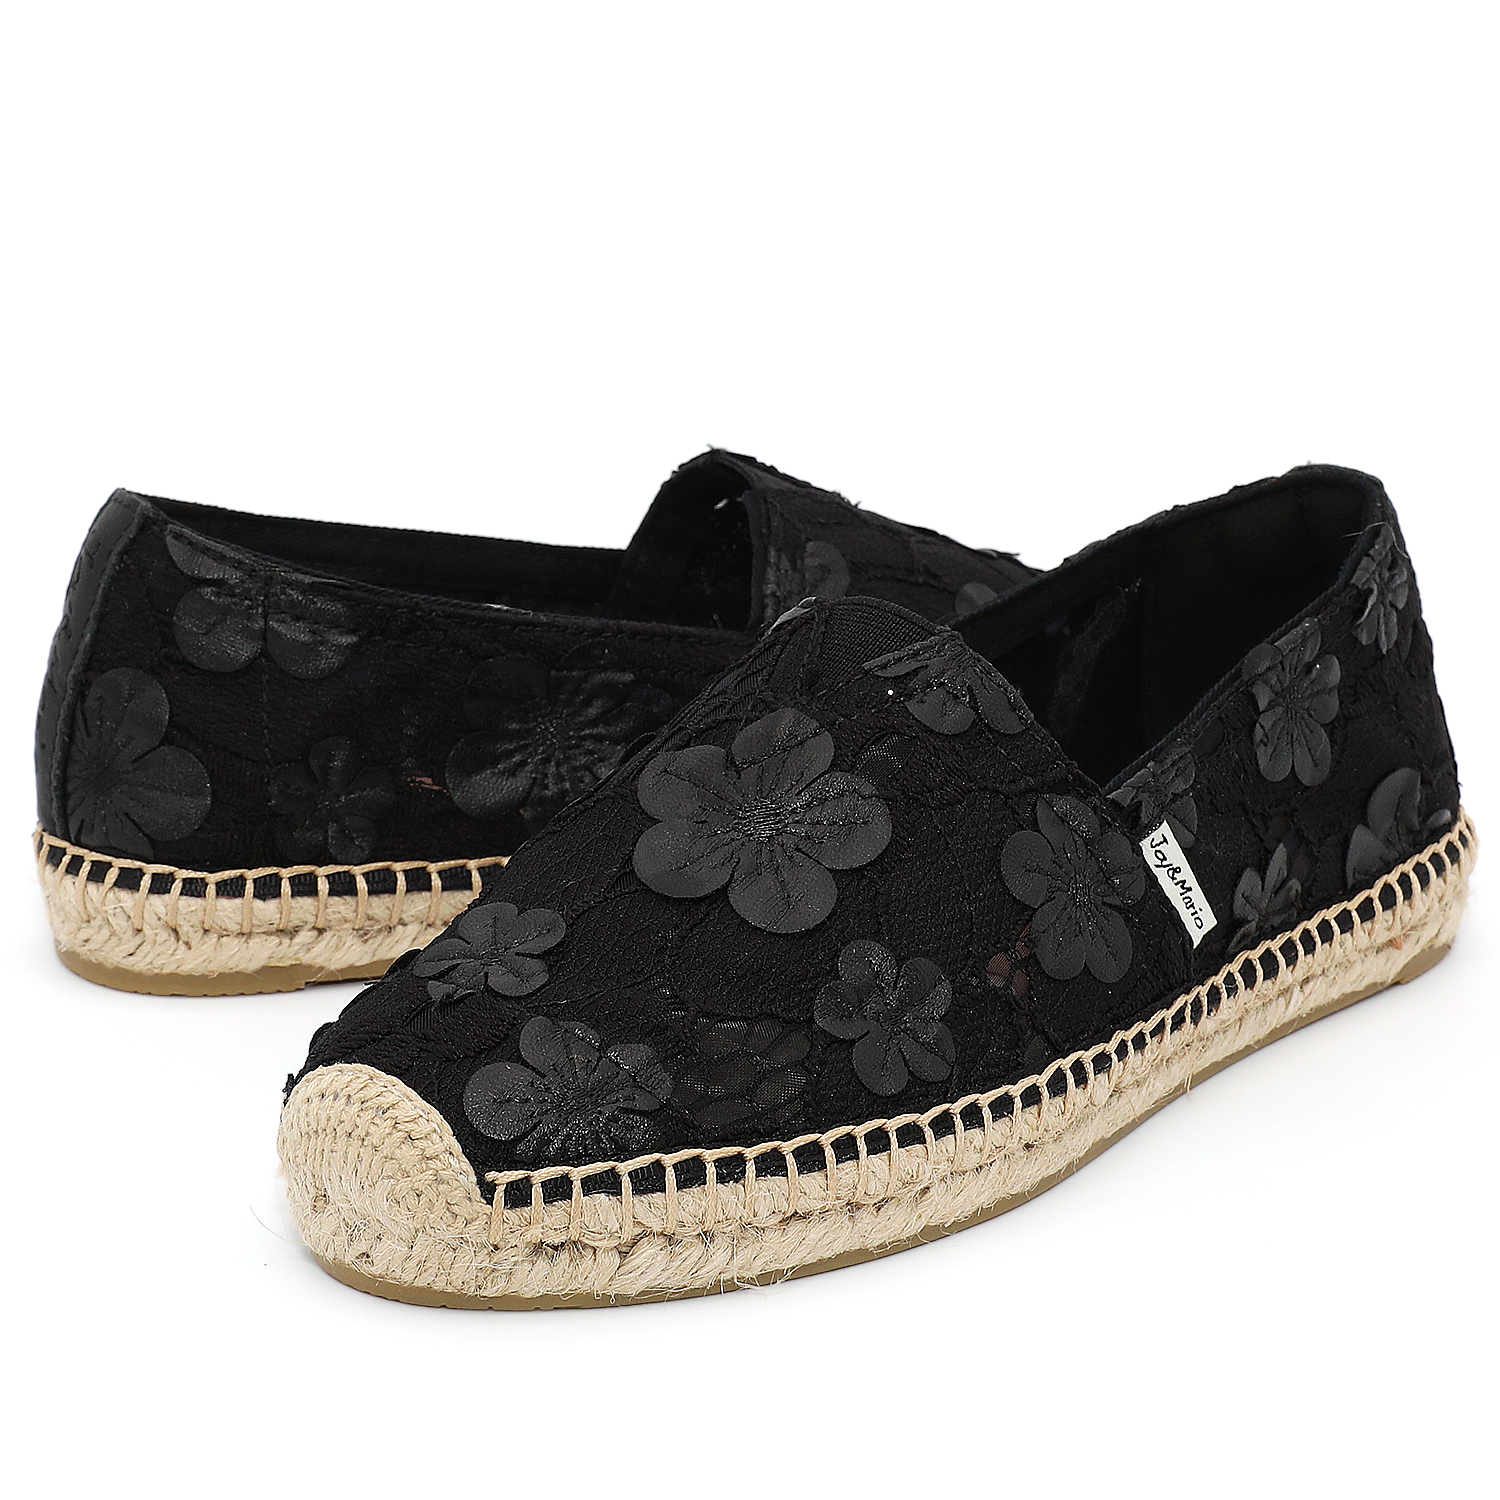 JOY&MARIO Handmade Women’s Slip-On Espadrille Mesh Loafers Flats in Black-A01287W